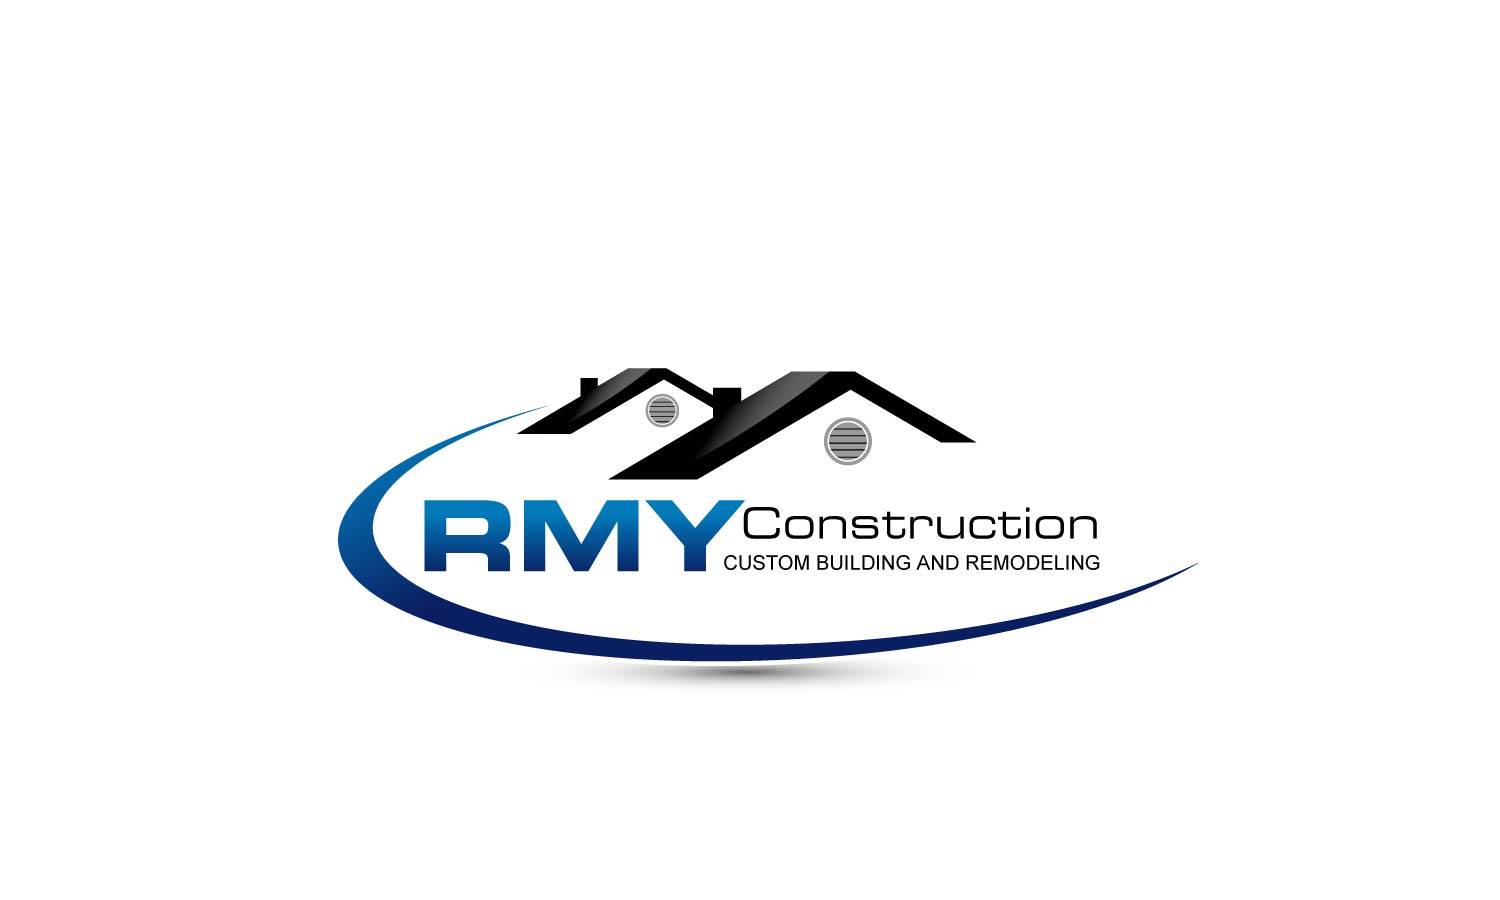 RMY Construction